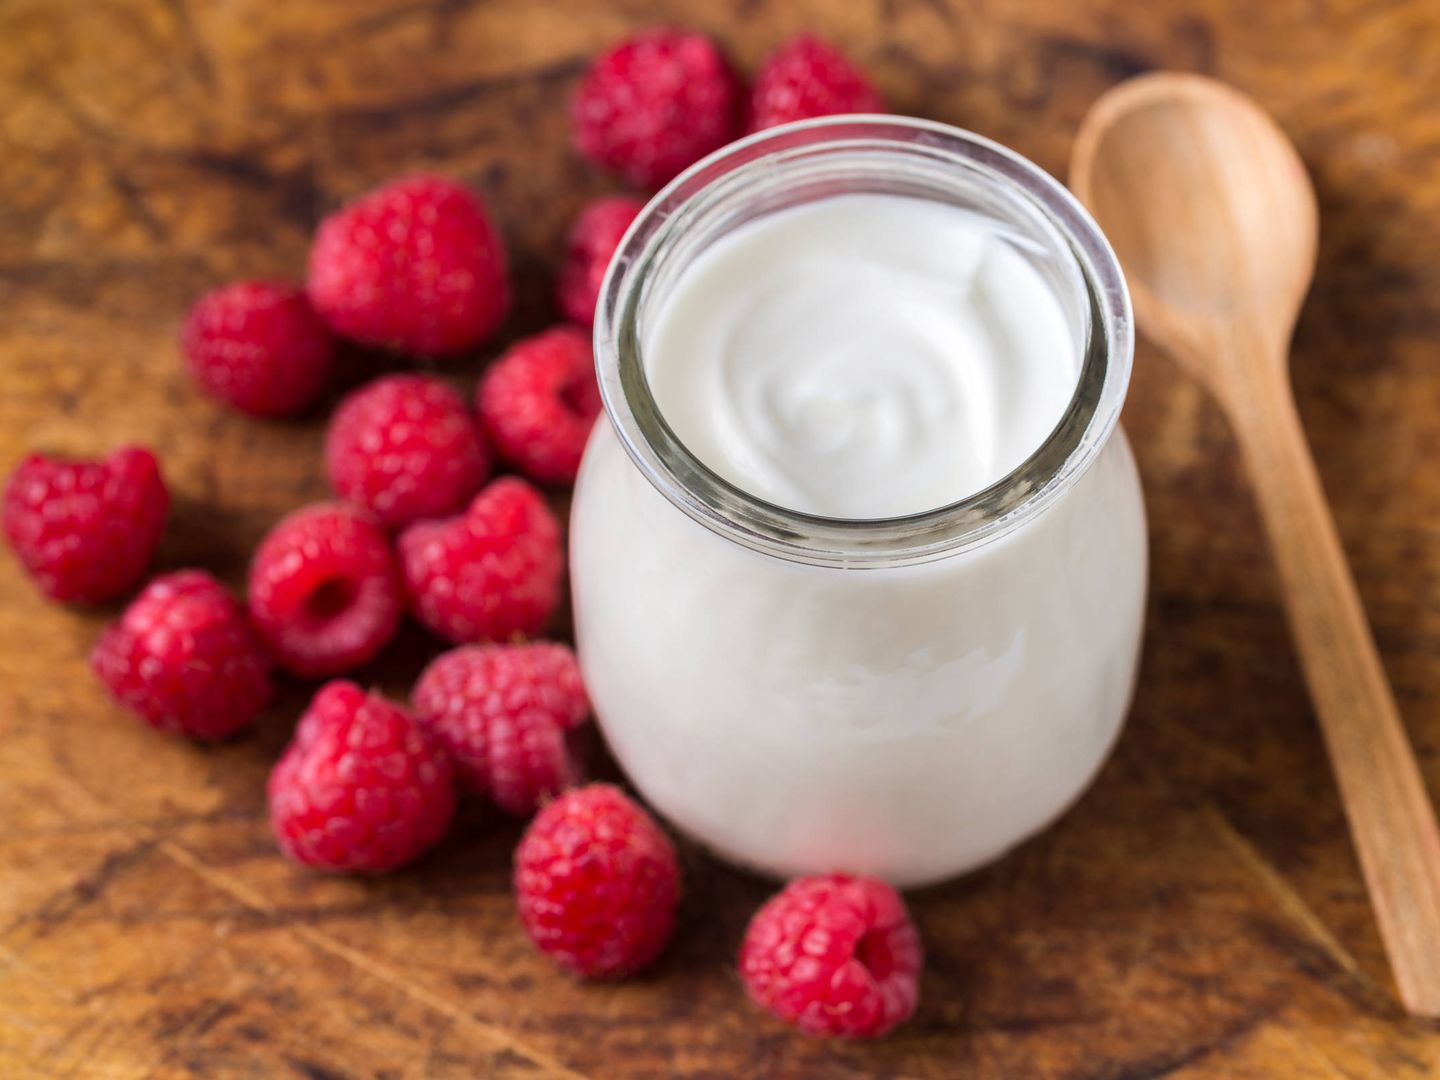 Dieta del yogur para adelgazar. (iStock)